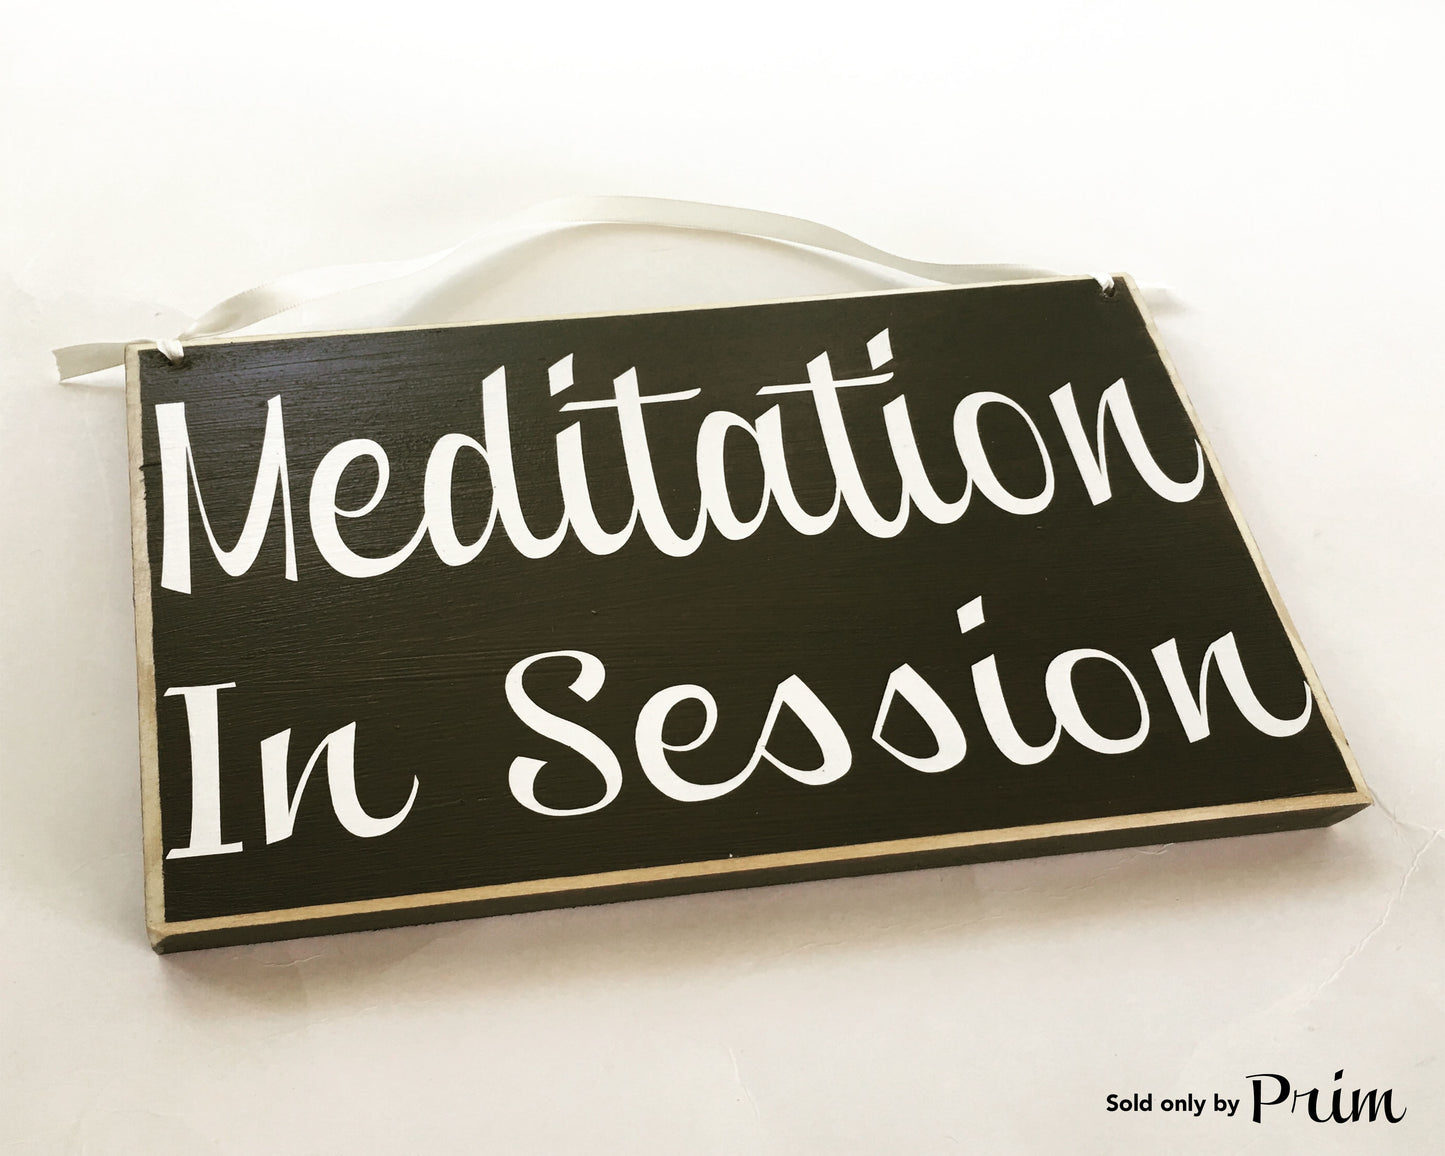 10x8 Meditation In Session Wood Namaste Ohm Om Sign